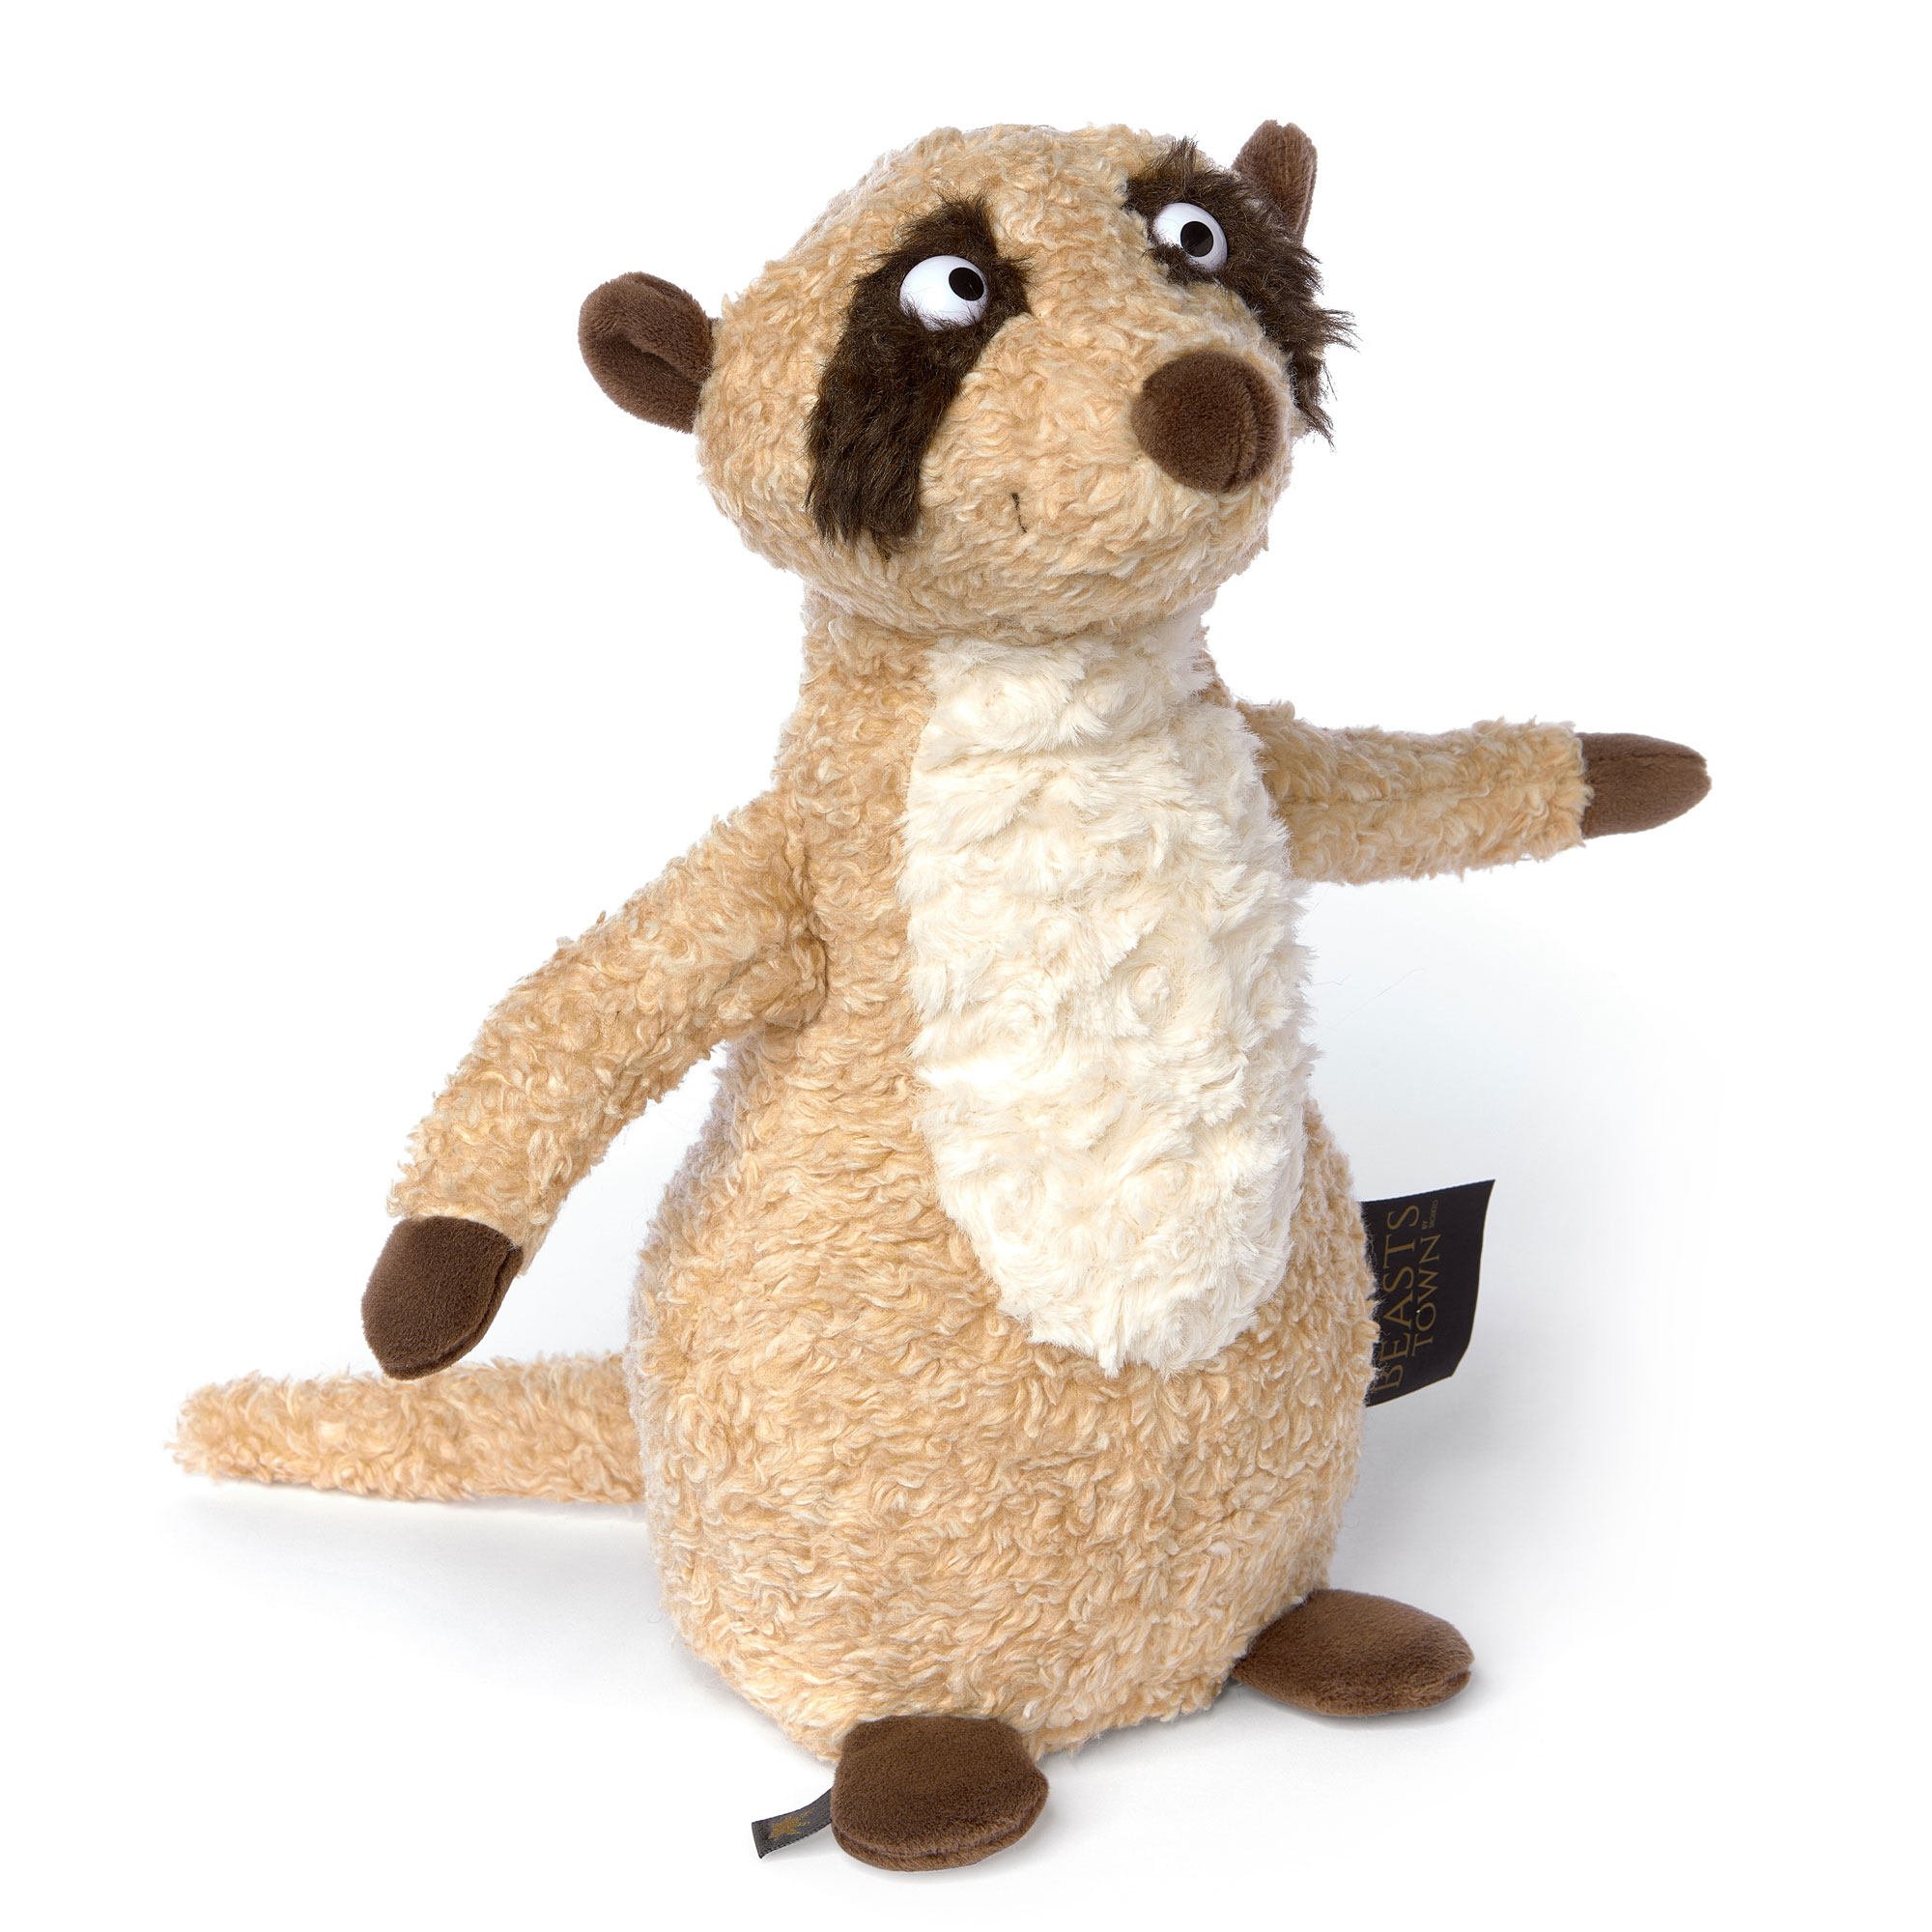 Plush toy meerkat Muru Muru, Beasts collection